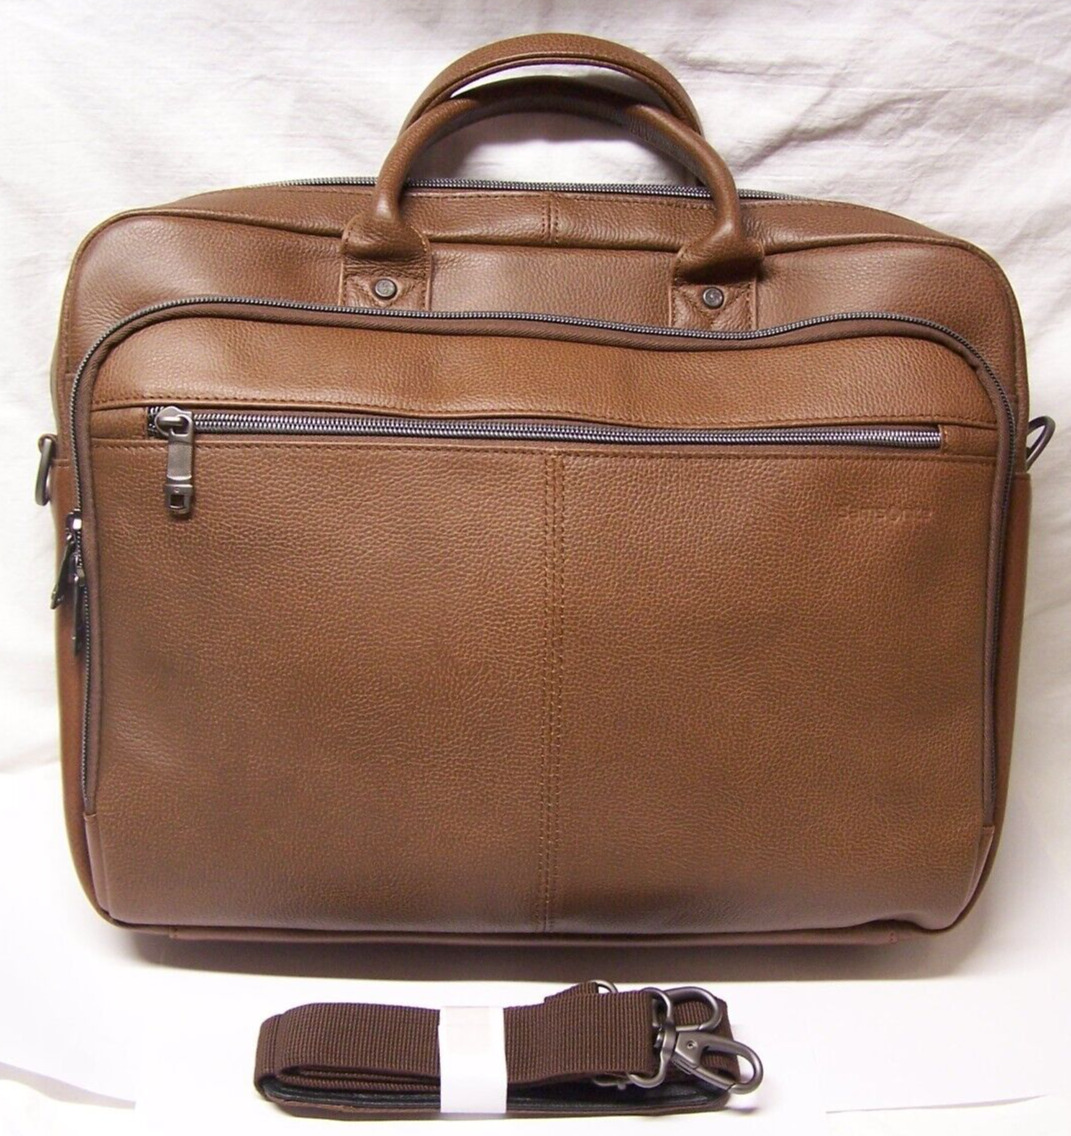 Samsonite Classic Leather Toploader Laptop Bag Briefcase Brown Cognac Portfolio